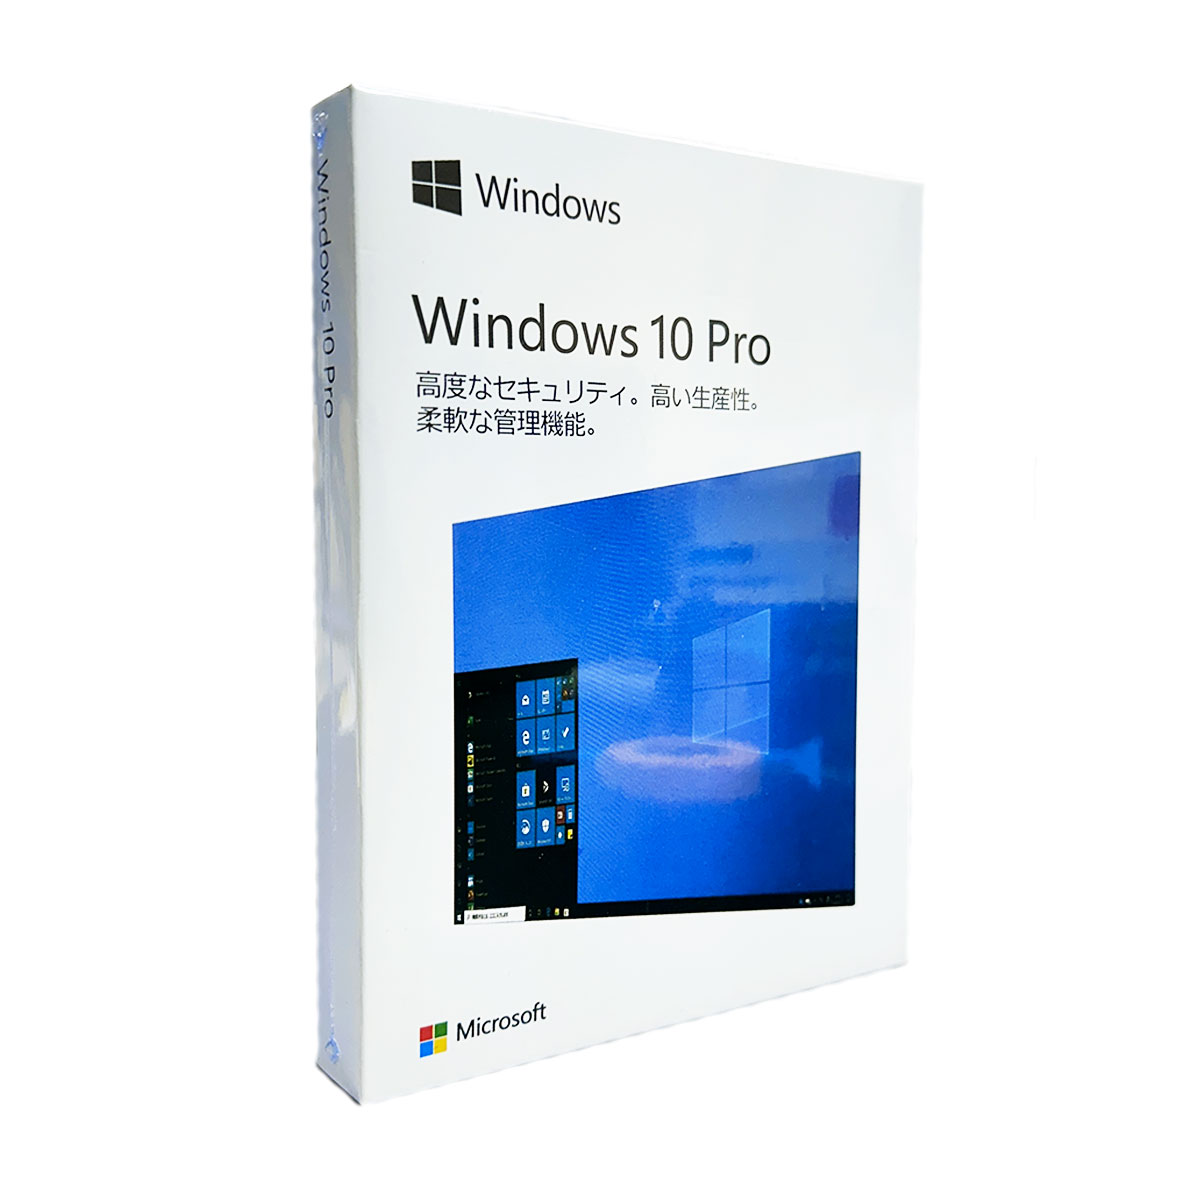 Featured image for “Microsoft Windows 10 Pro OS 日本語 パッケージ版 USB”